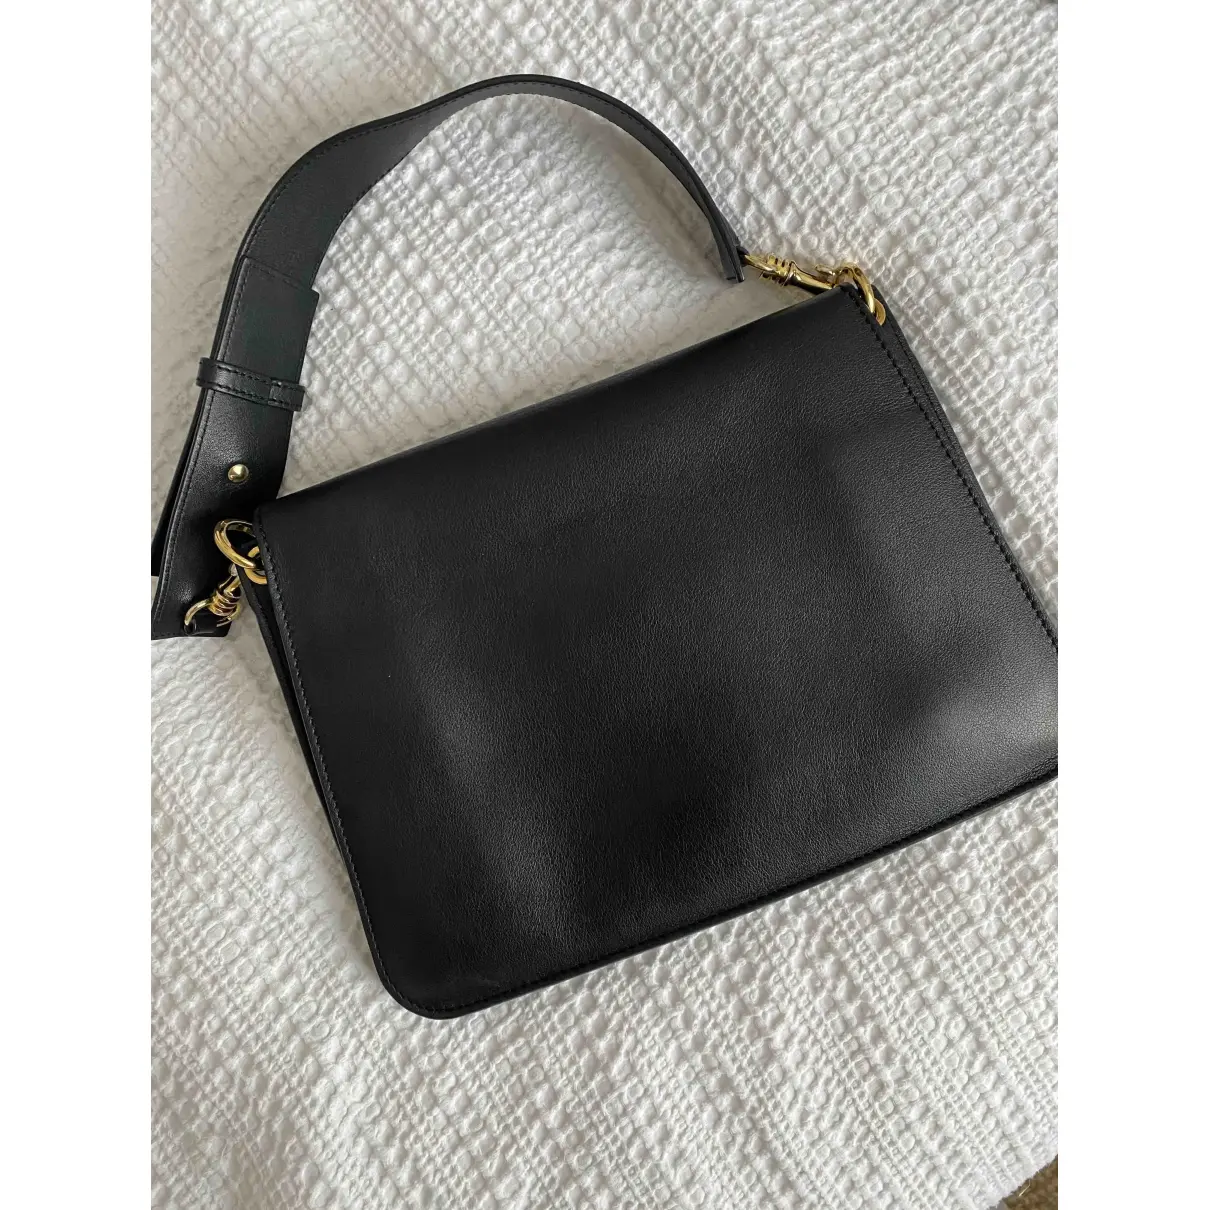 Buy JW Anderson Pierce leather handbag online